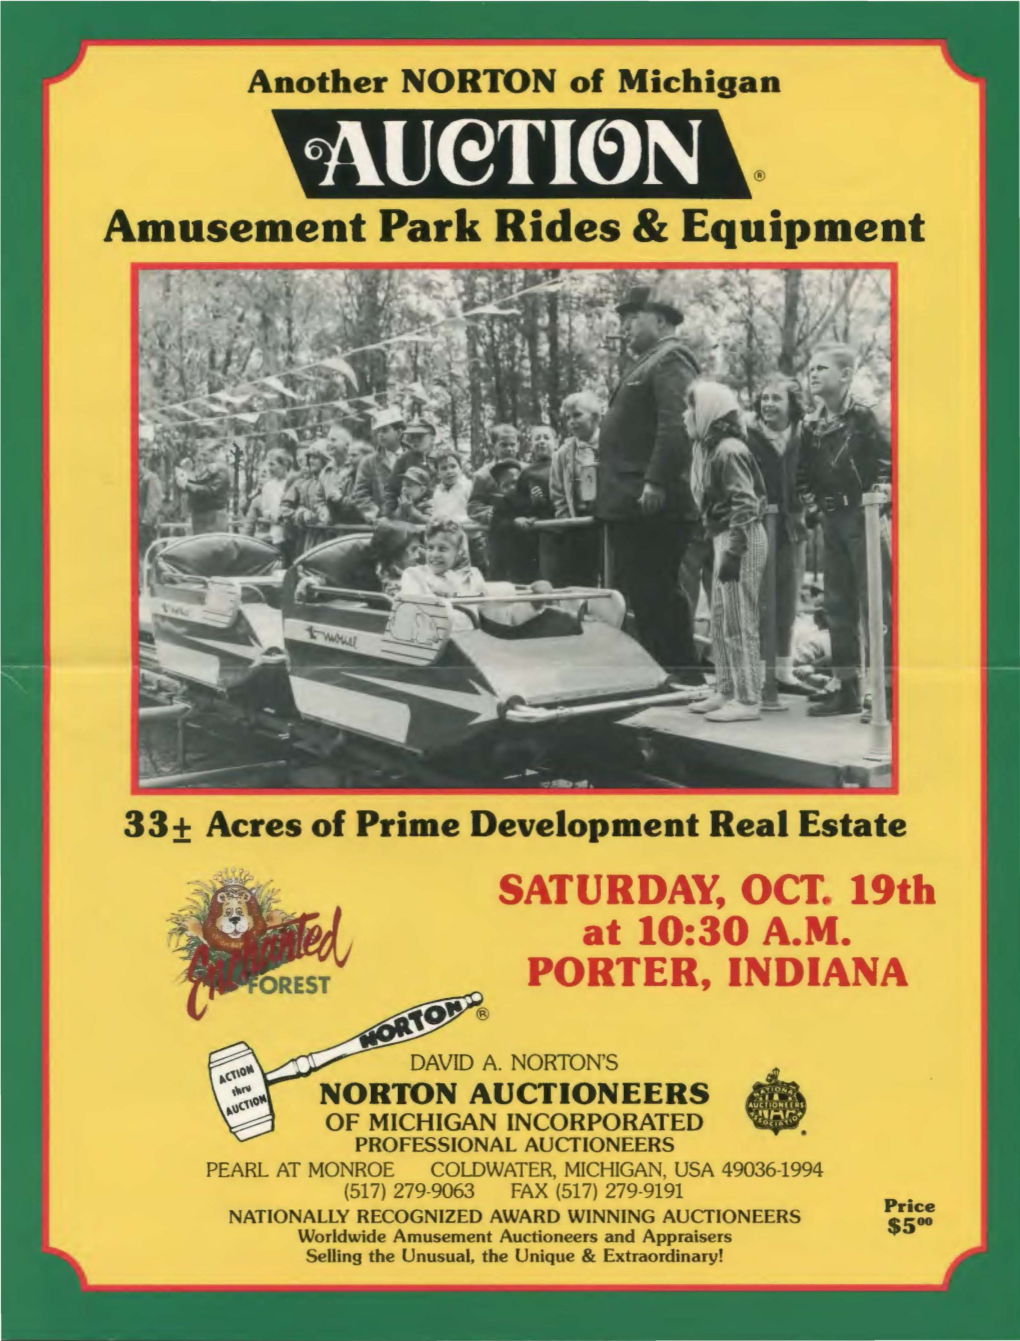 6AU@TI6N ® Amusement Park Rides & Equipment